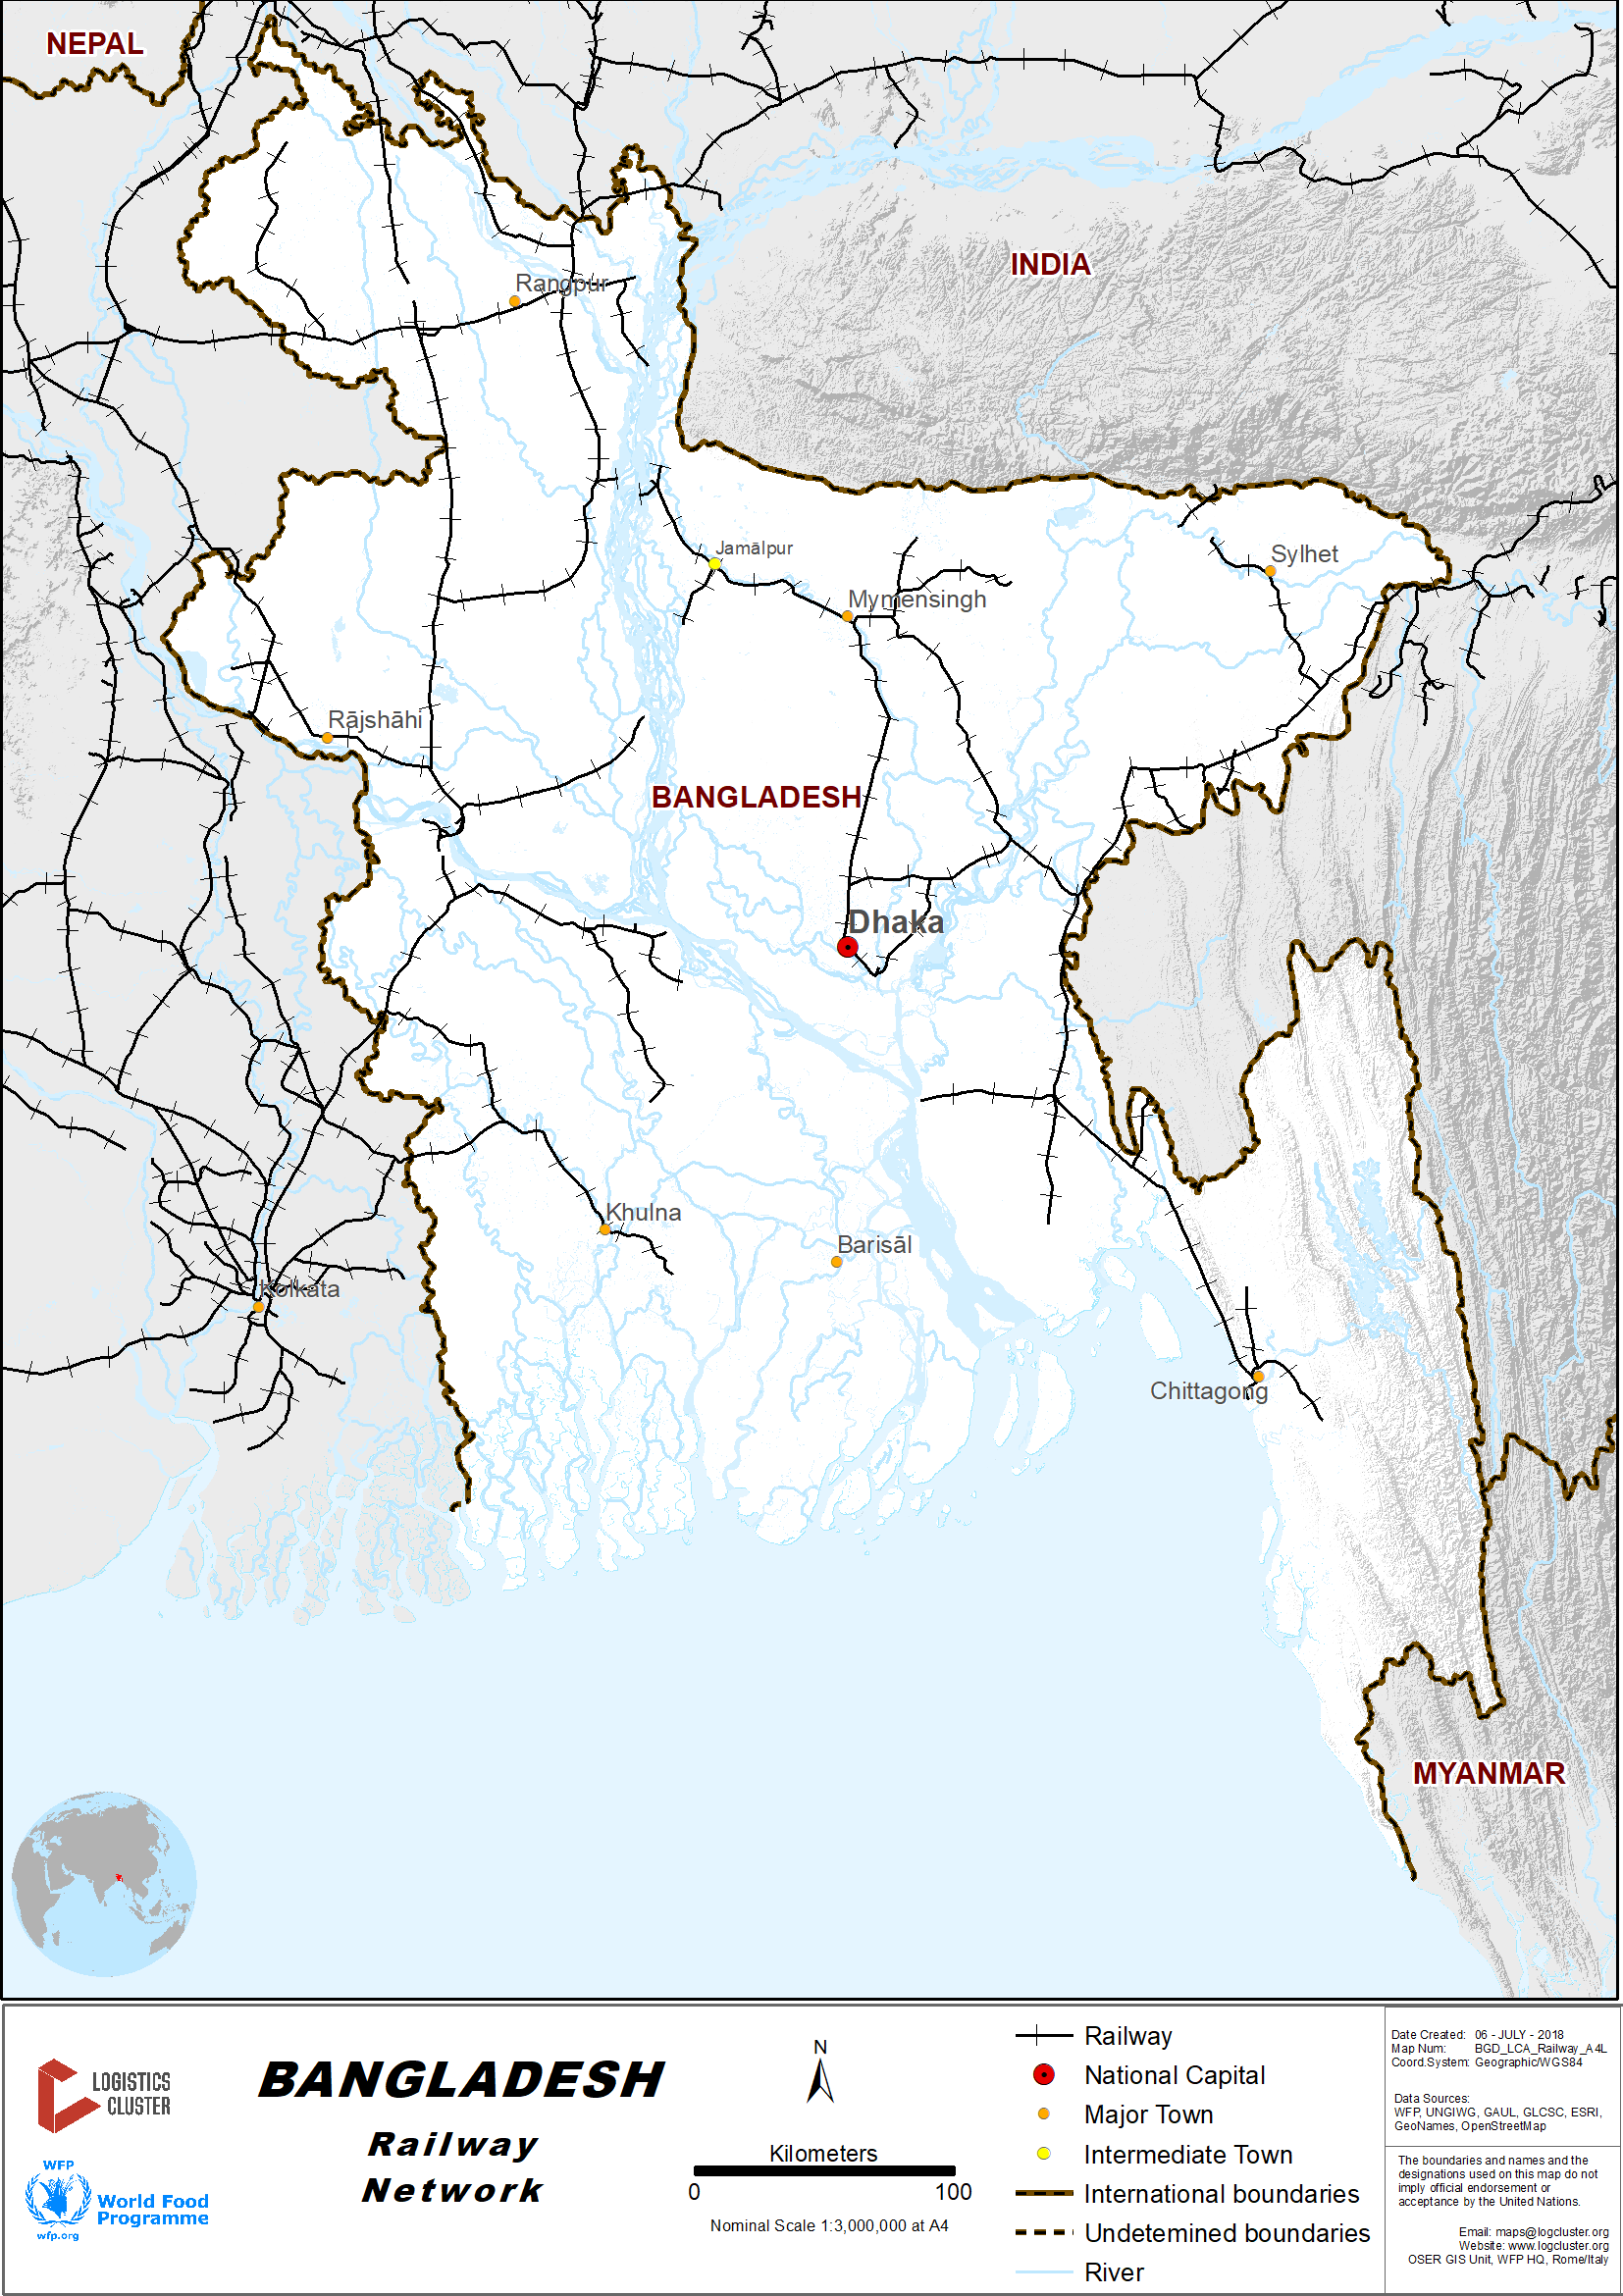 Bangladesh Railway Map